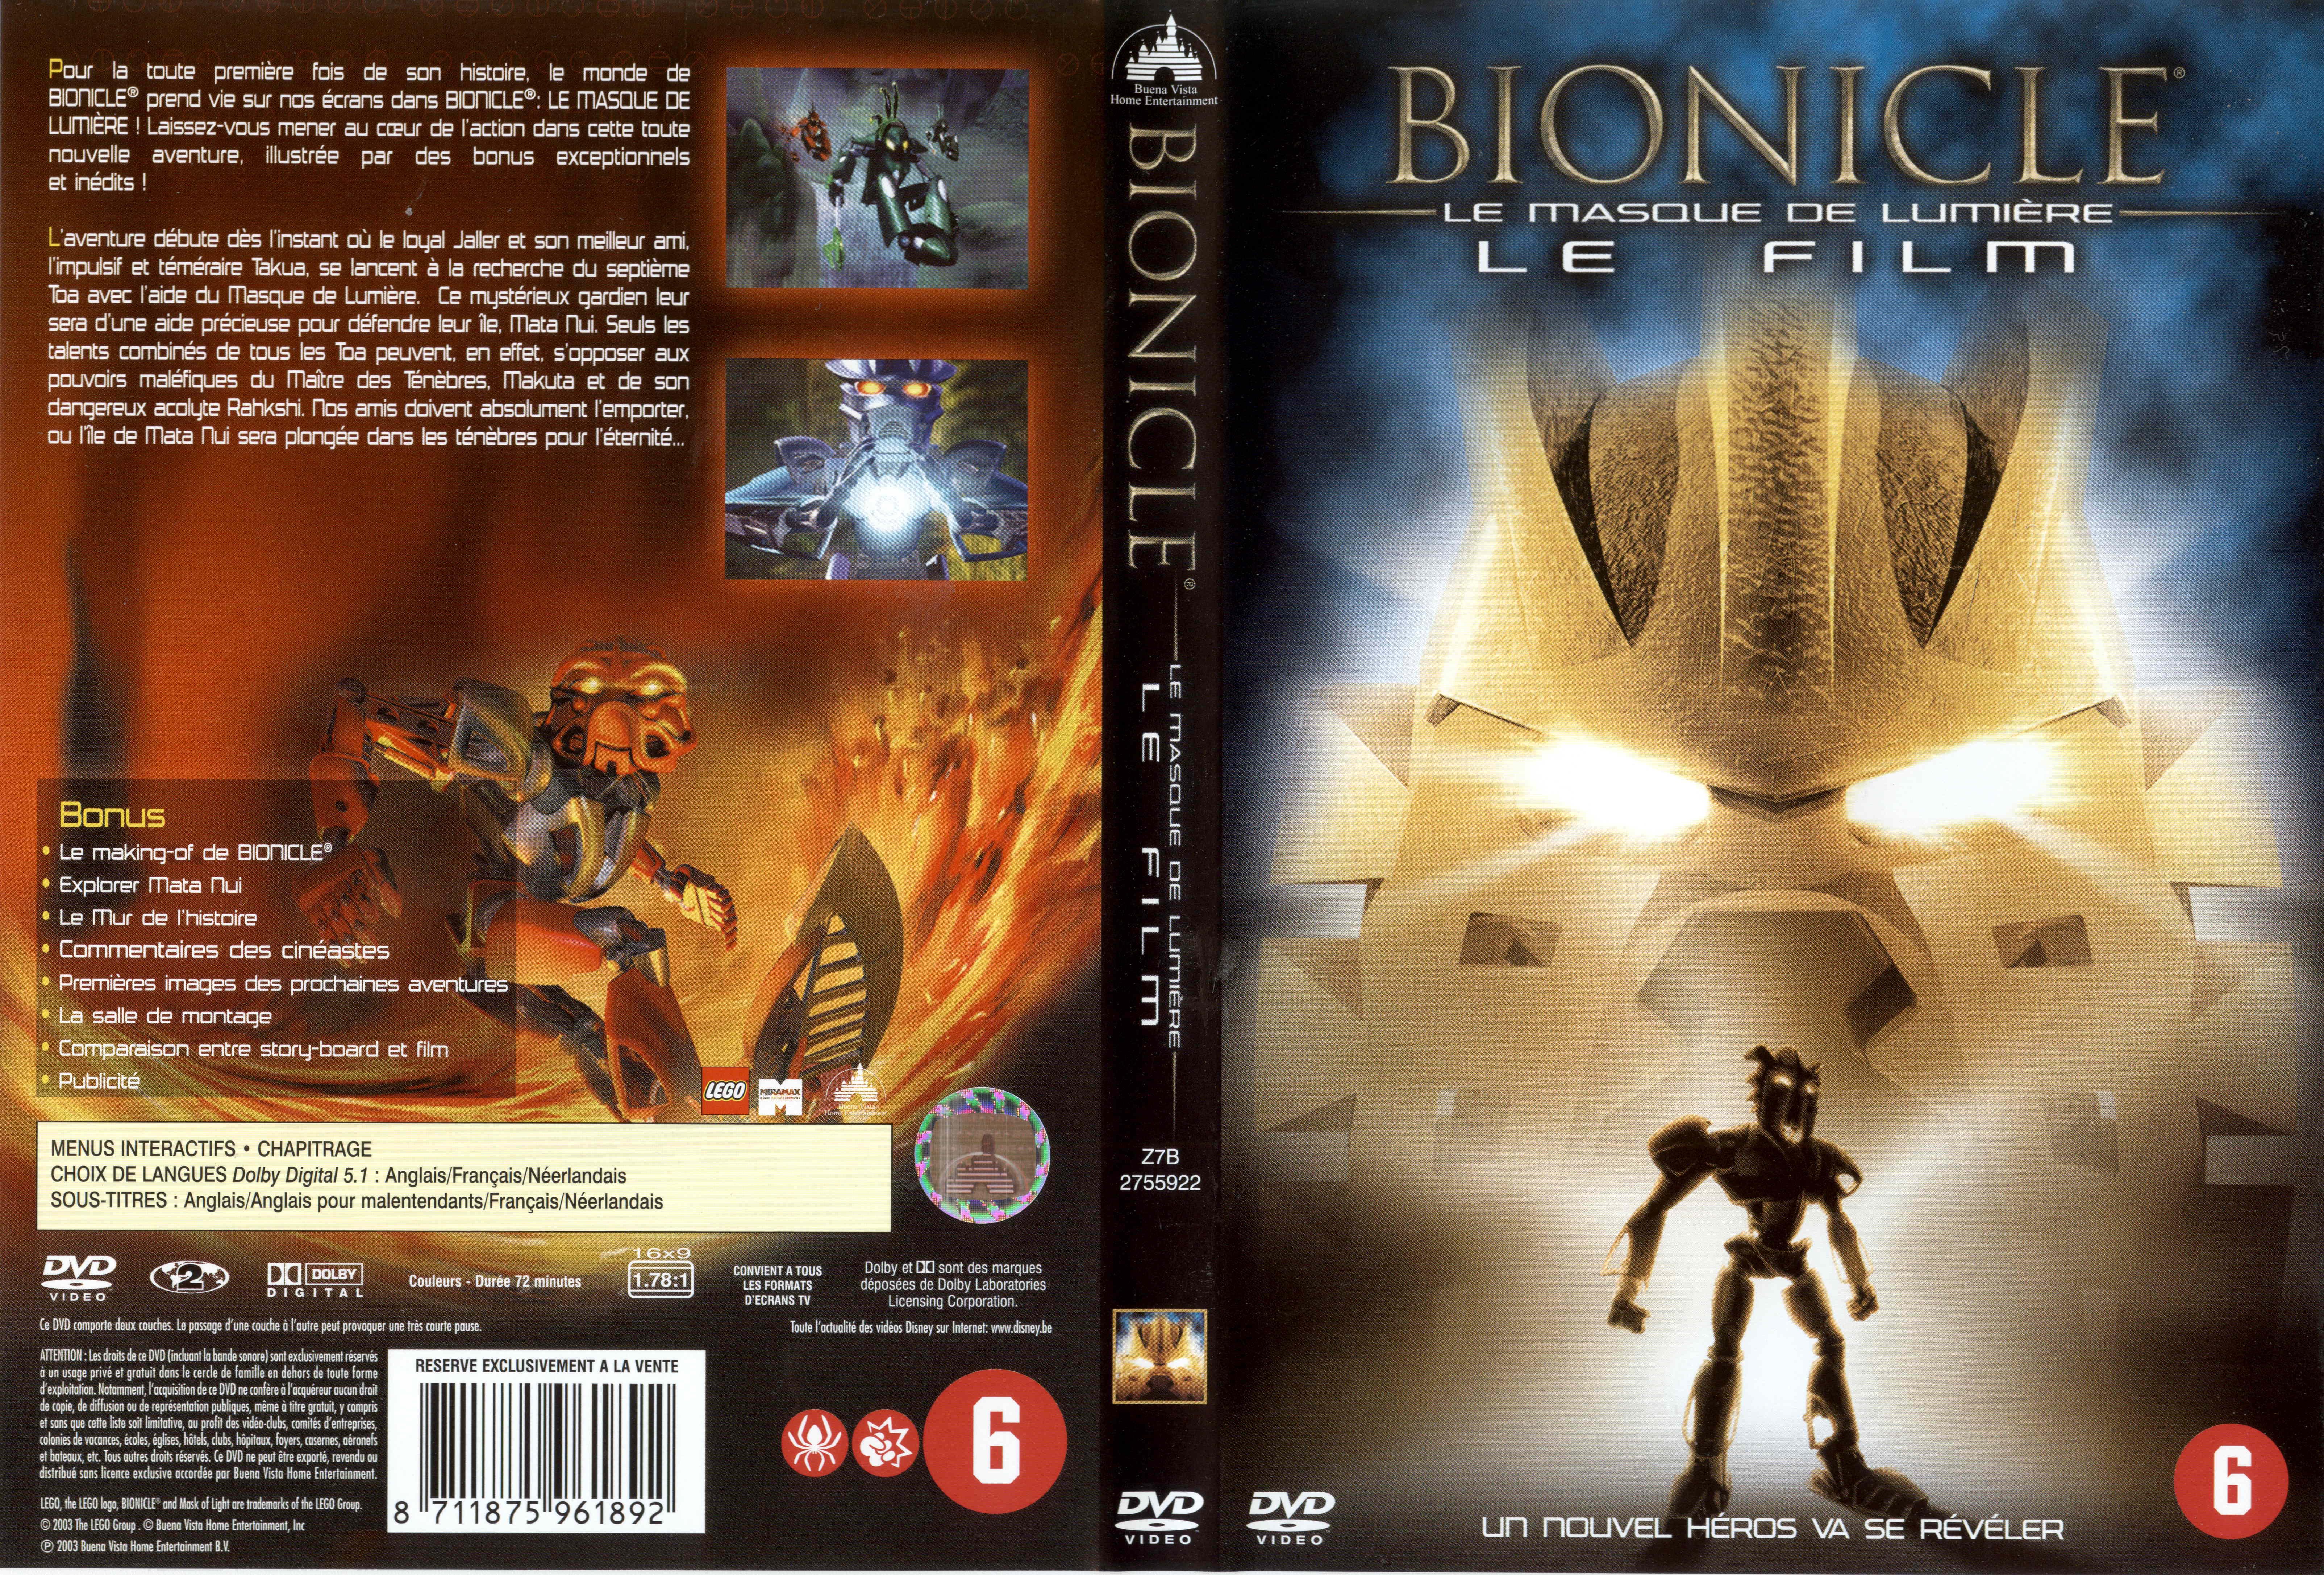 Jaquette DVD Bionicle v2